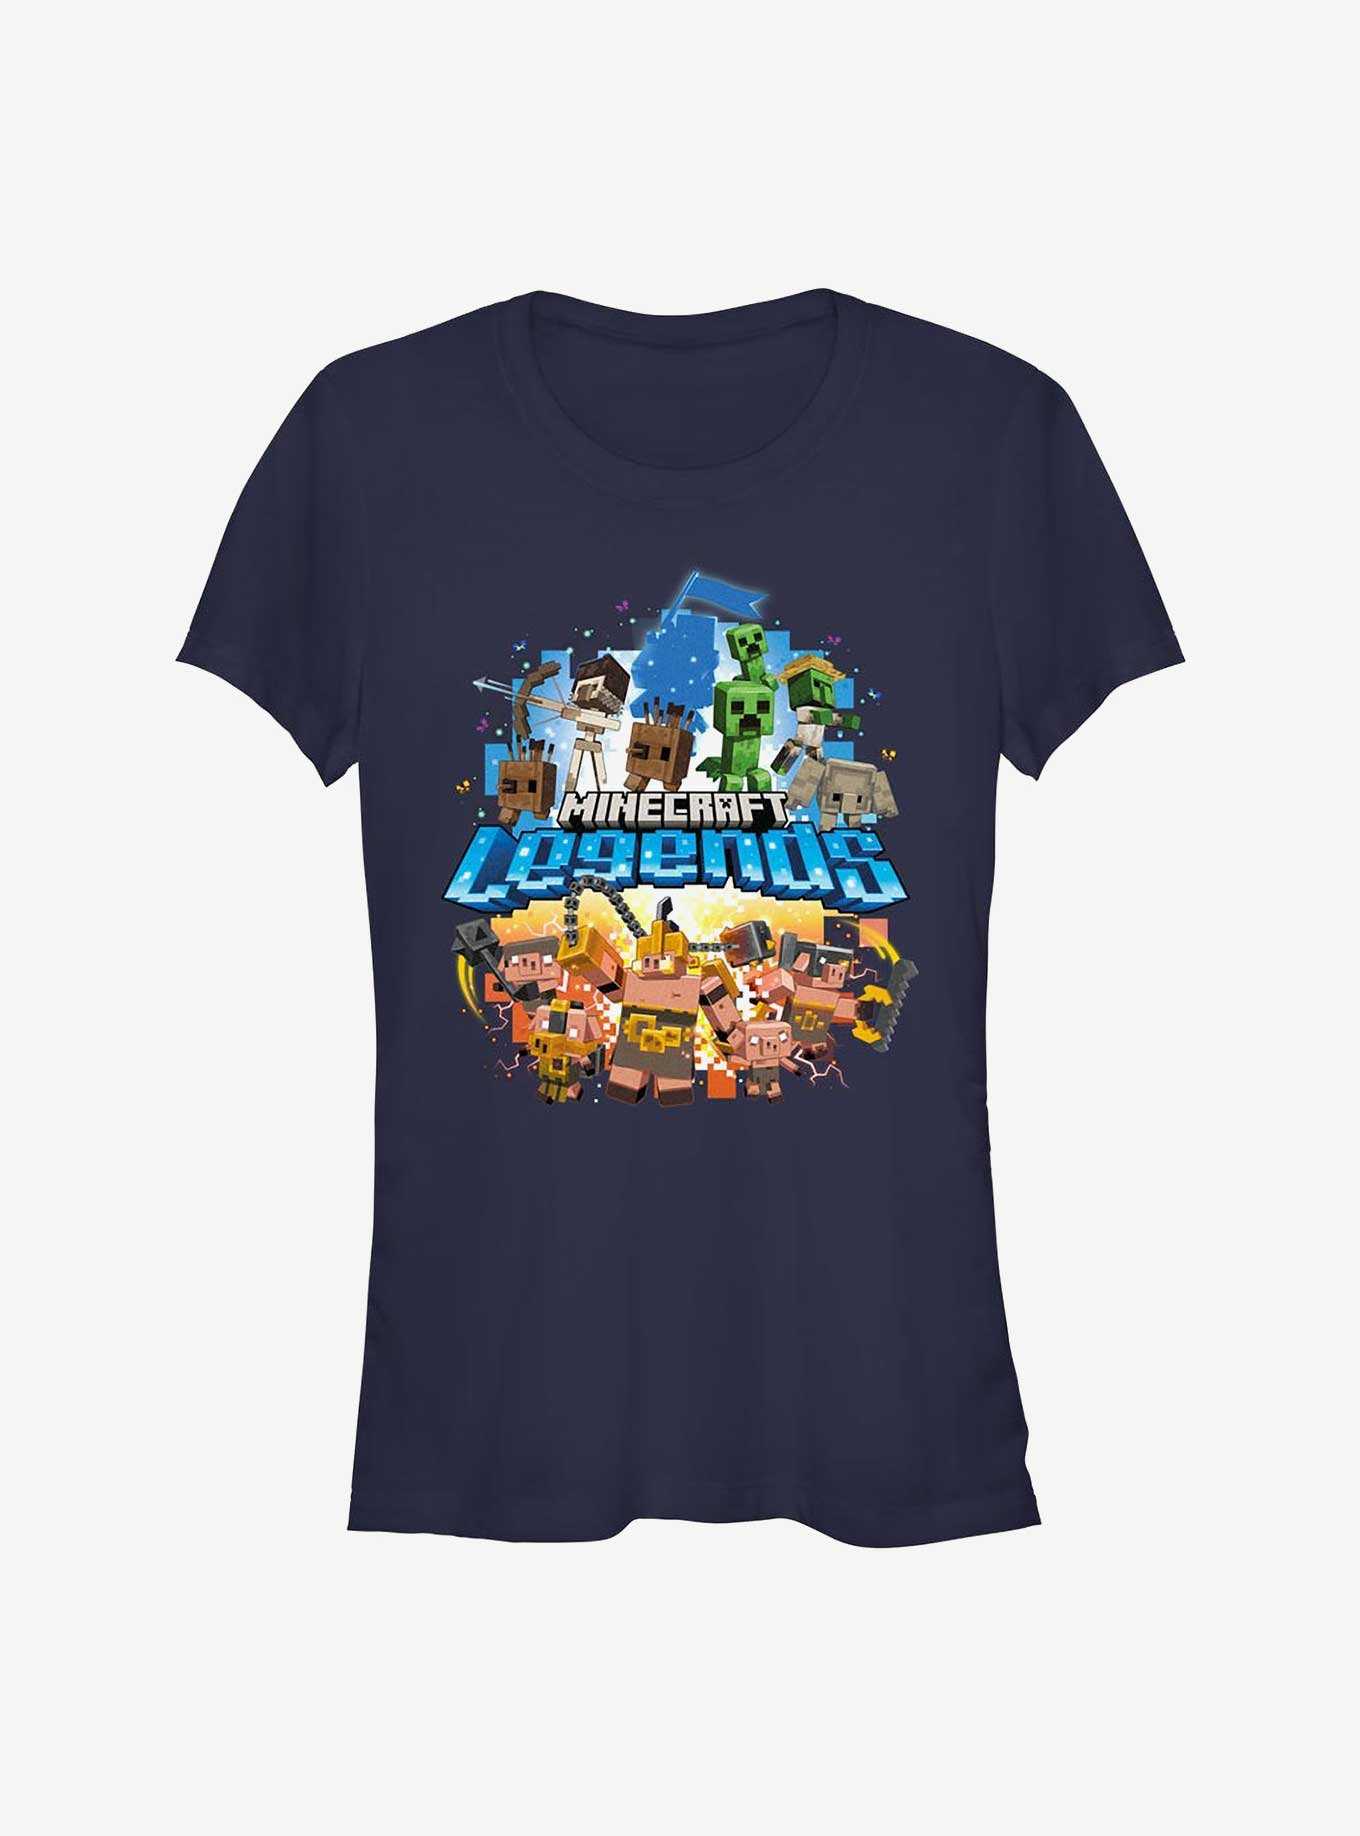 Minecraft Legends Overworld vs. Nether Girls T-Shirt, , hi-res